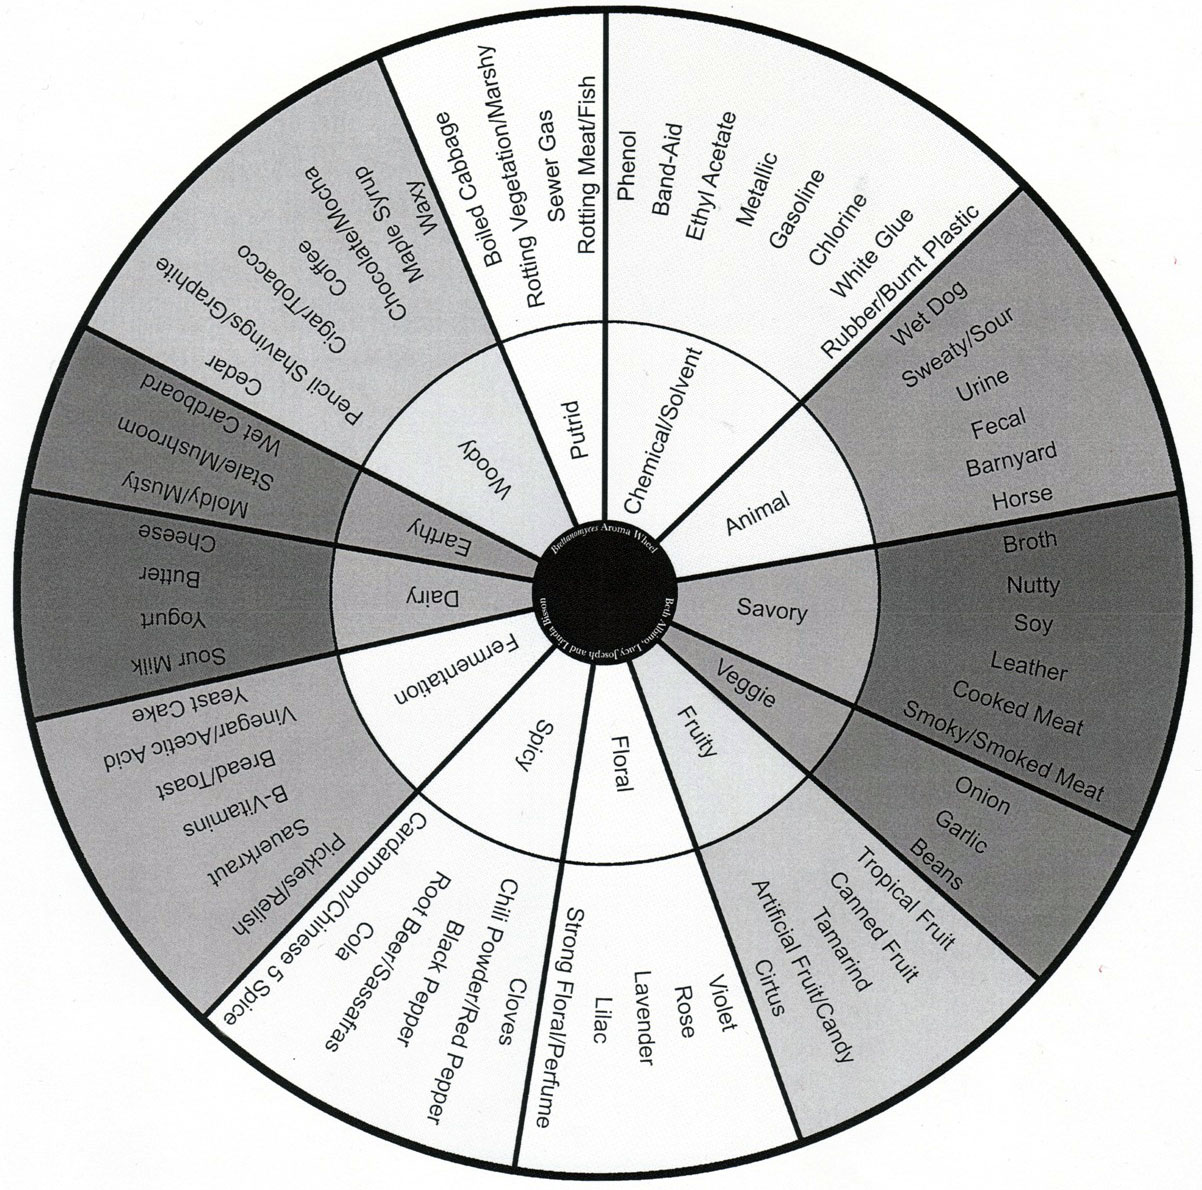 Brettanomyces Flavor Wheel